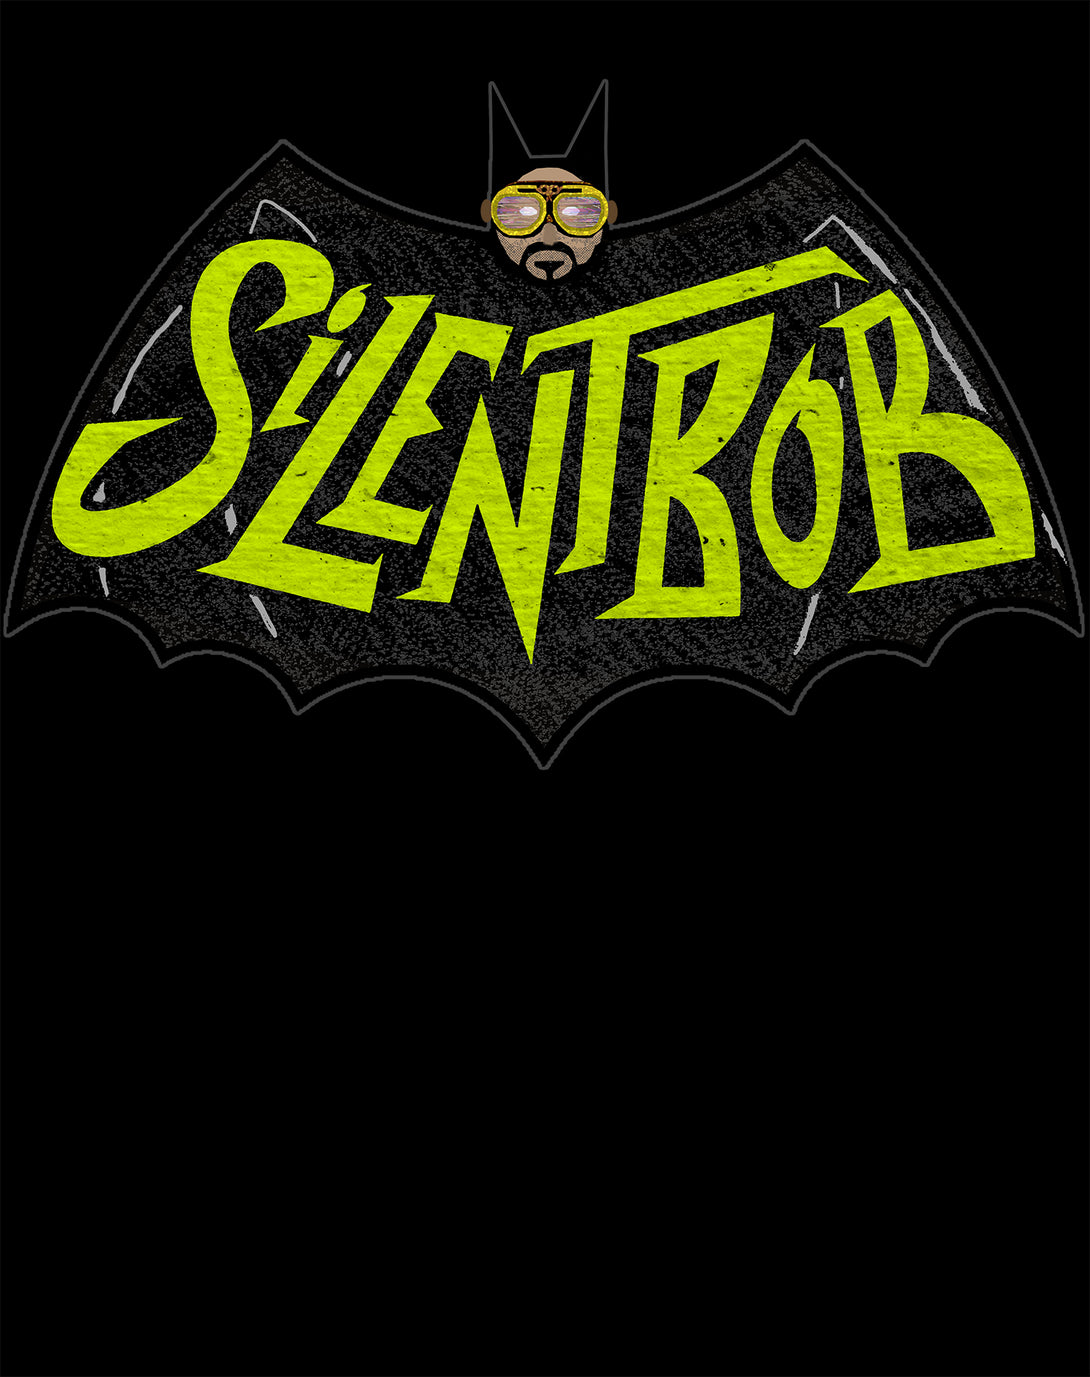 Kevin Smith View Askewniverse Logo Silent Bat Bob Official Men's T-Shirt Black - Urban Species Design Close Up